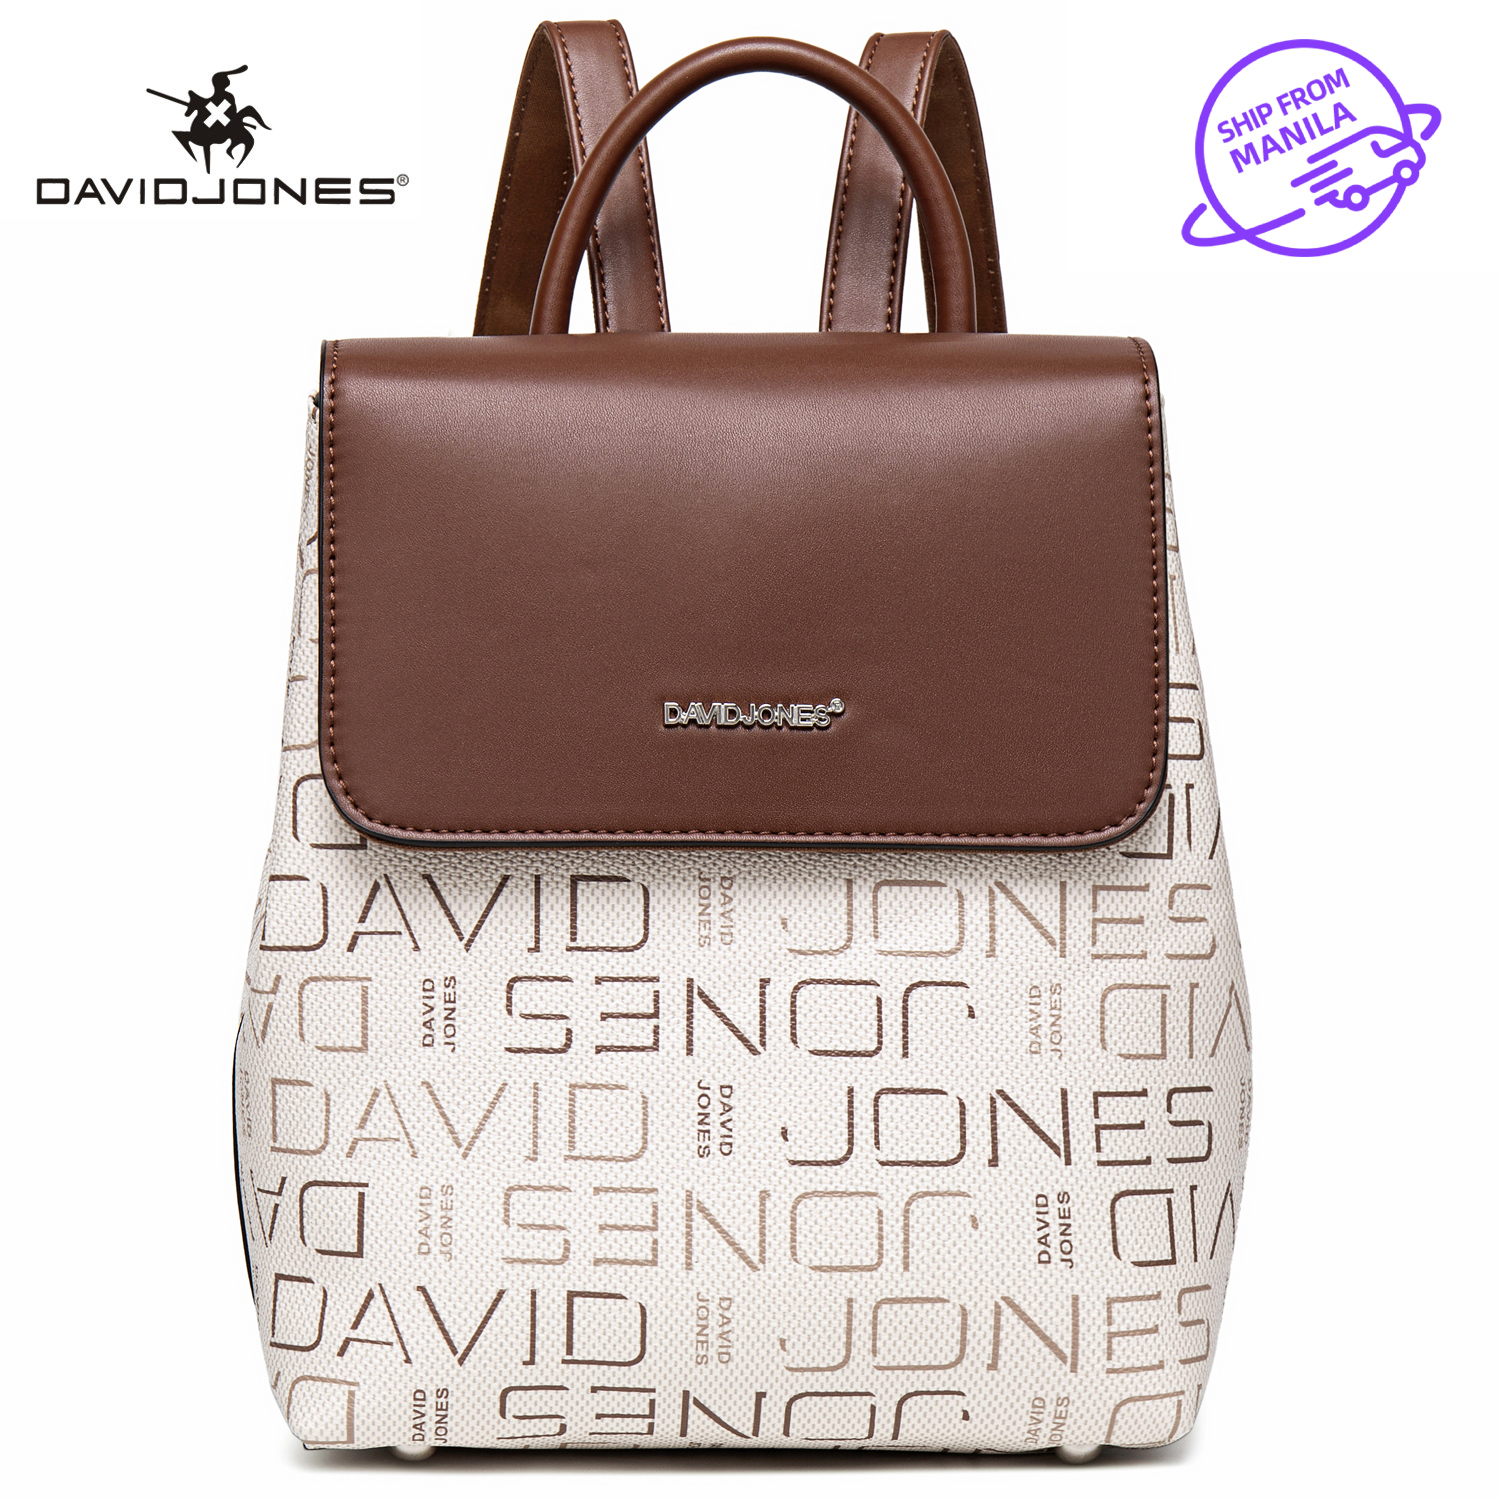 David jones Paris backpack for women travel bag pack bag back pack